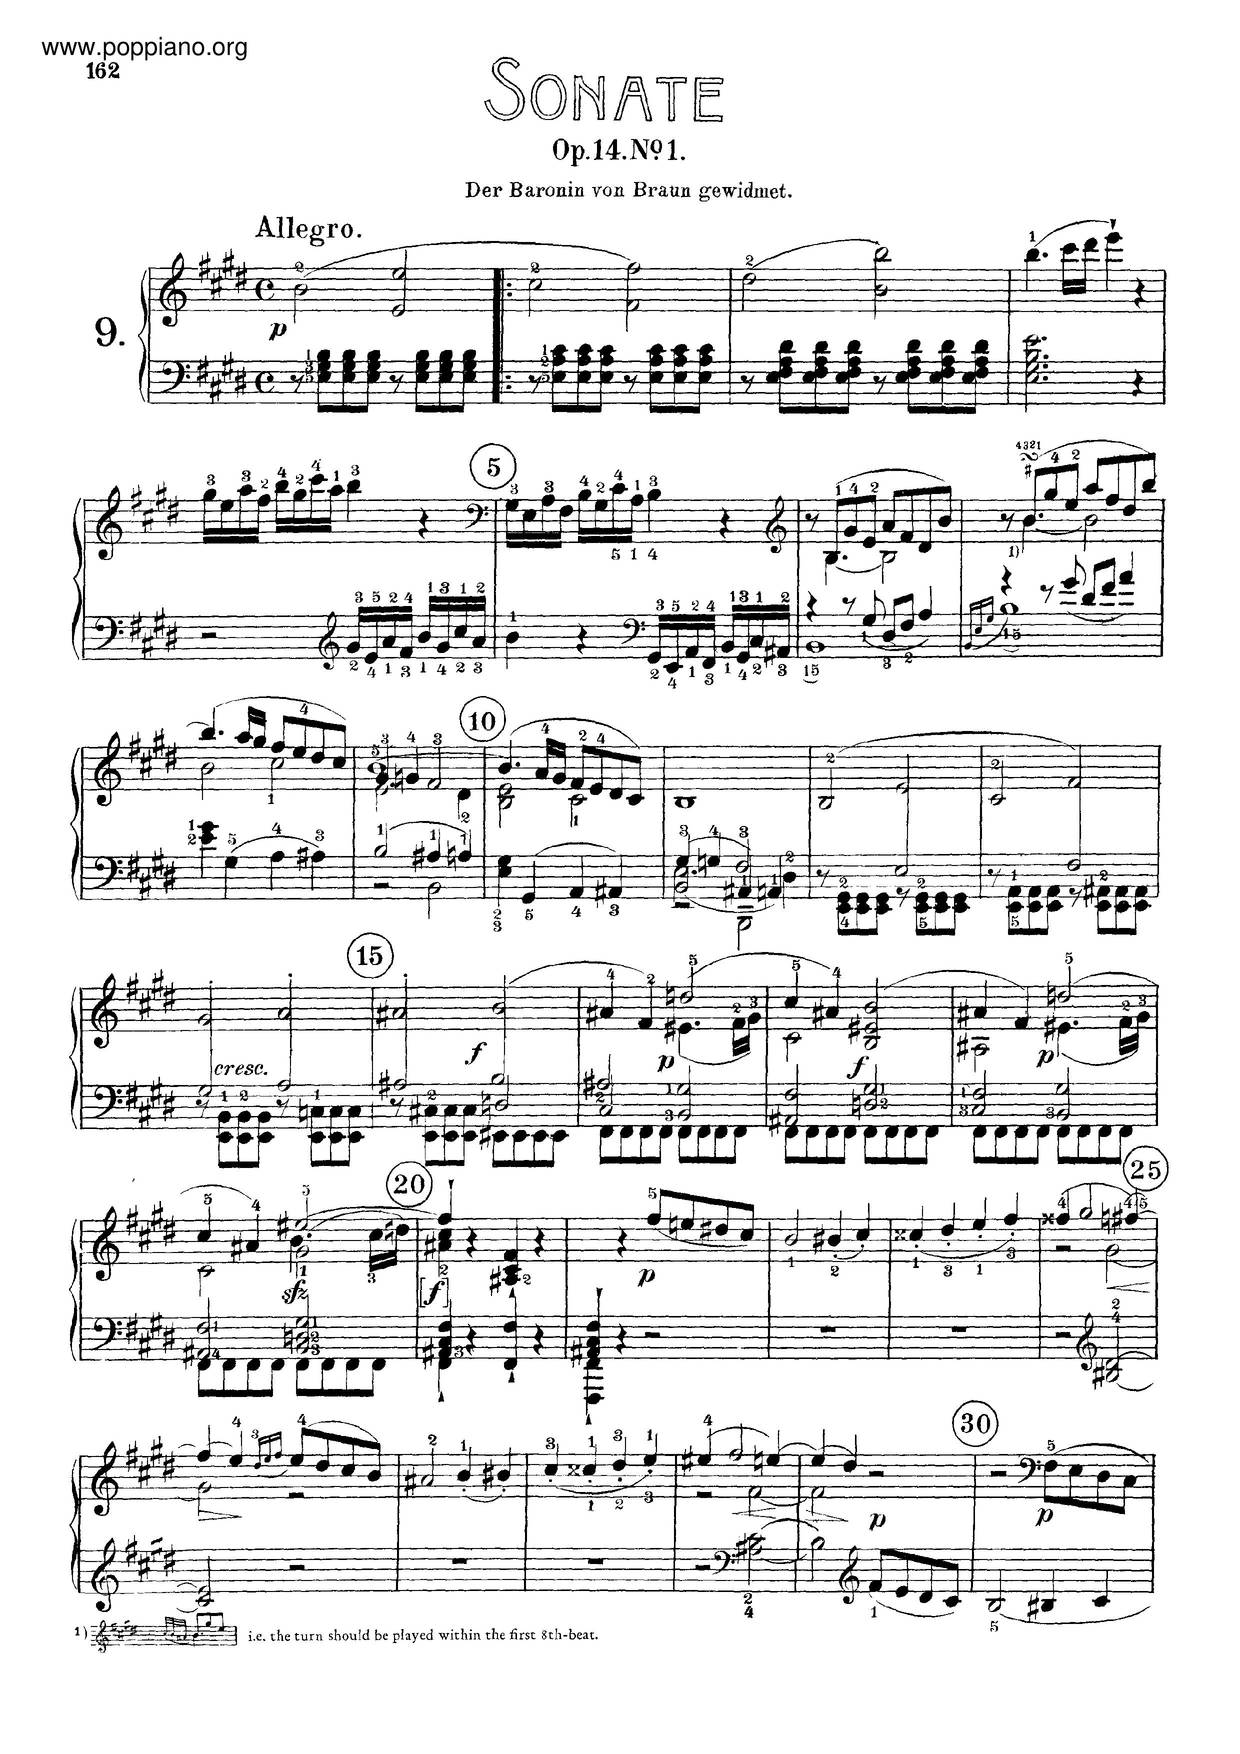 Piano Sonata No. 9 In E Major, Op. 14 No. 1 Score